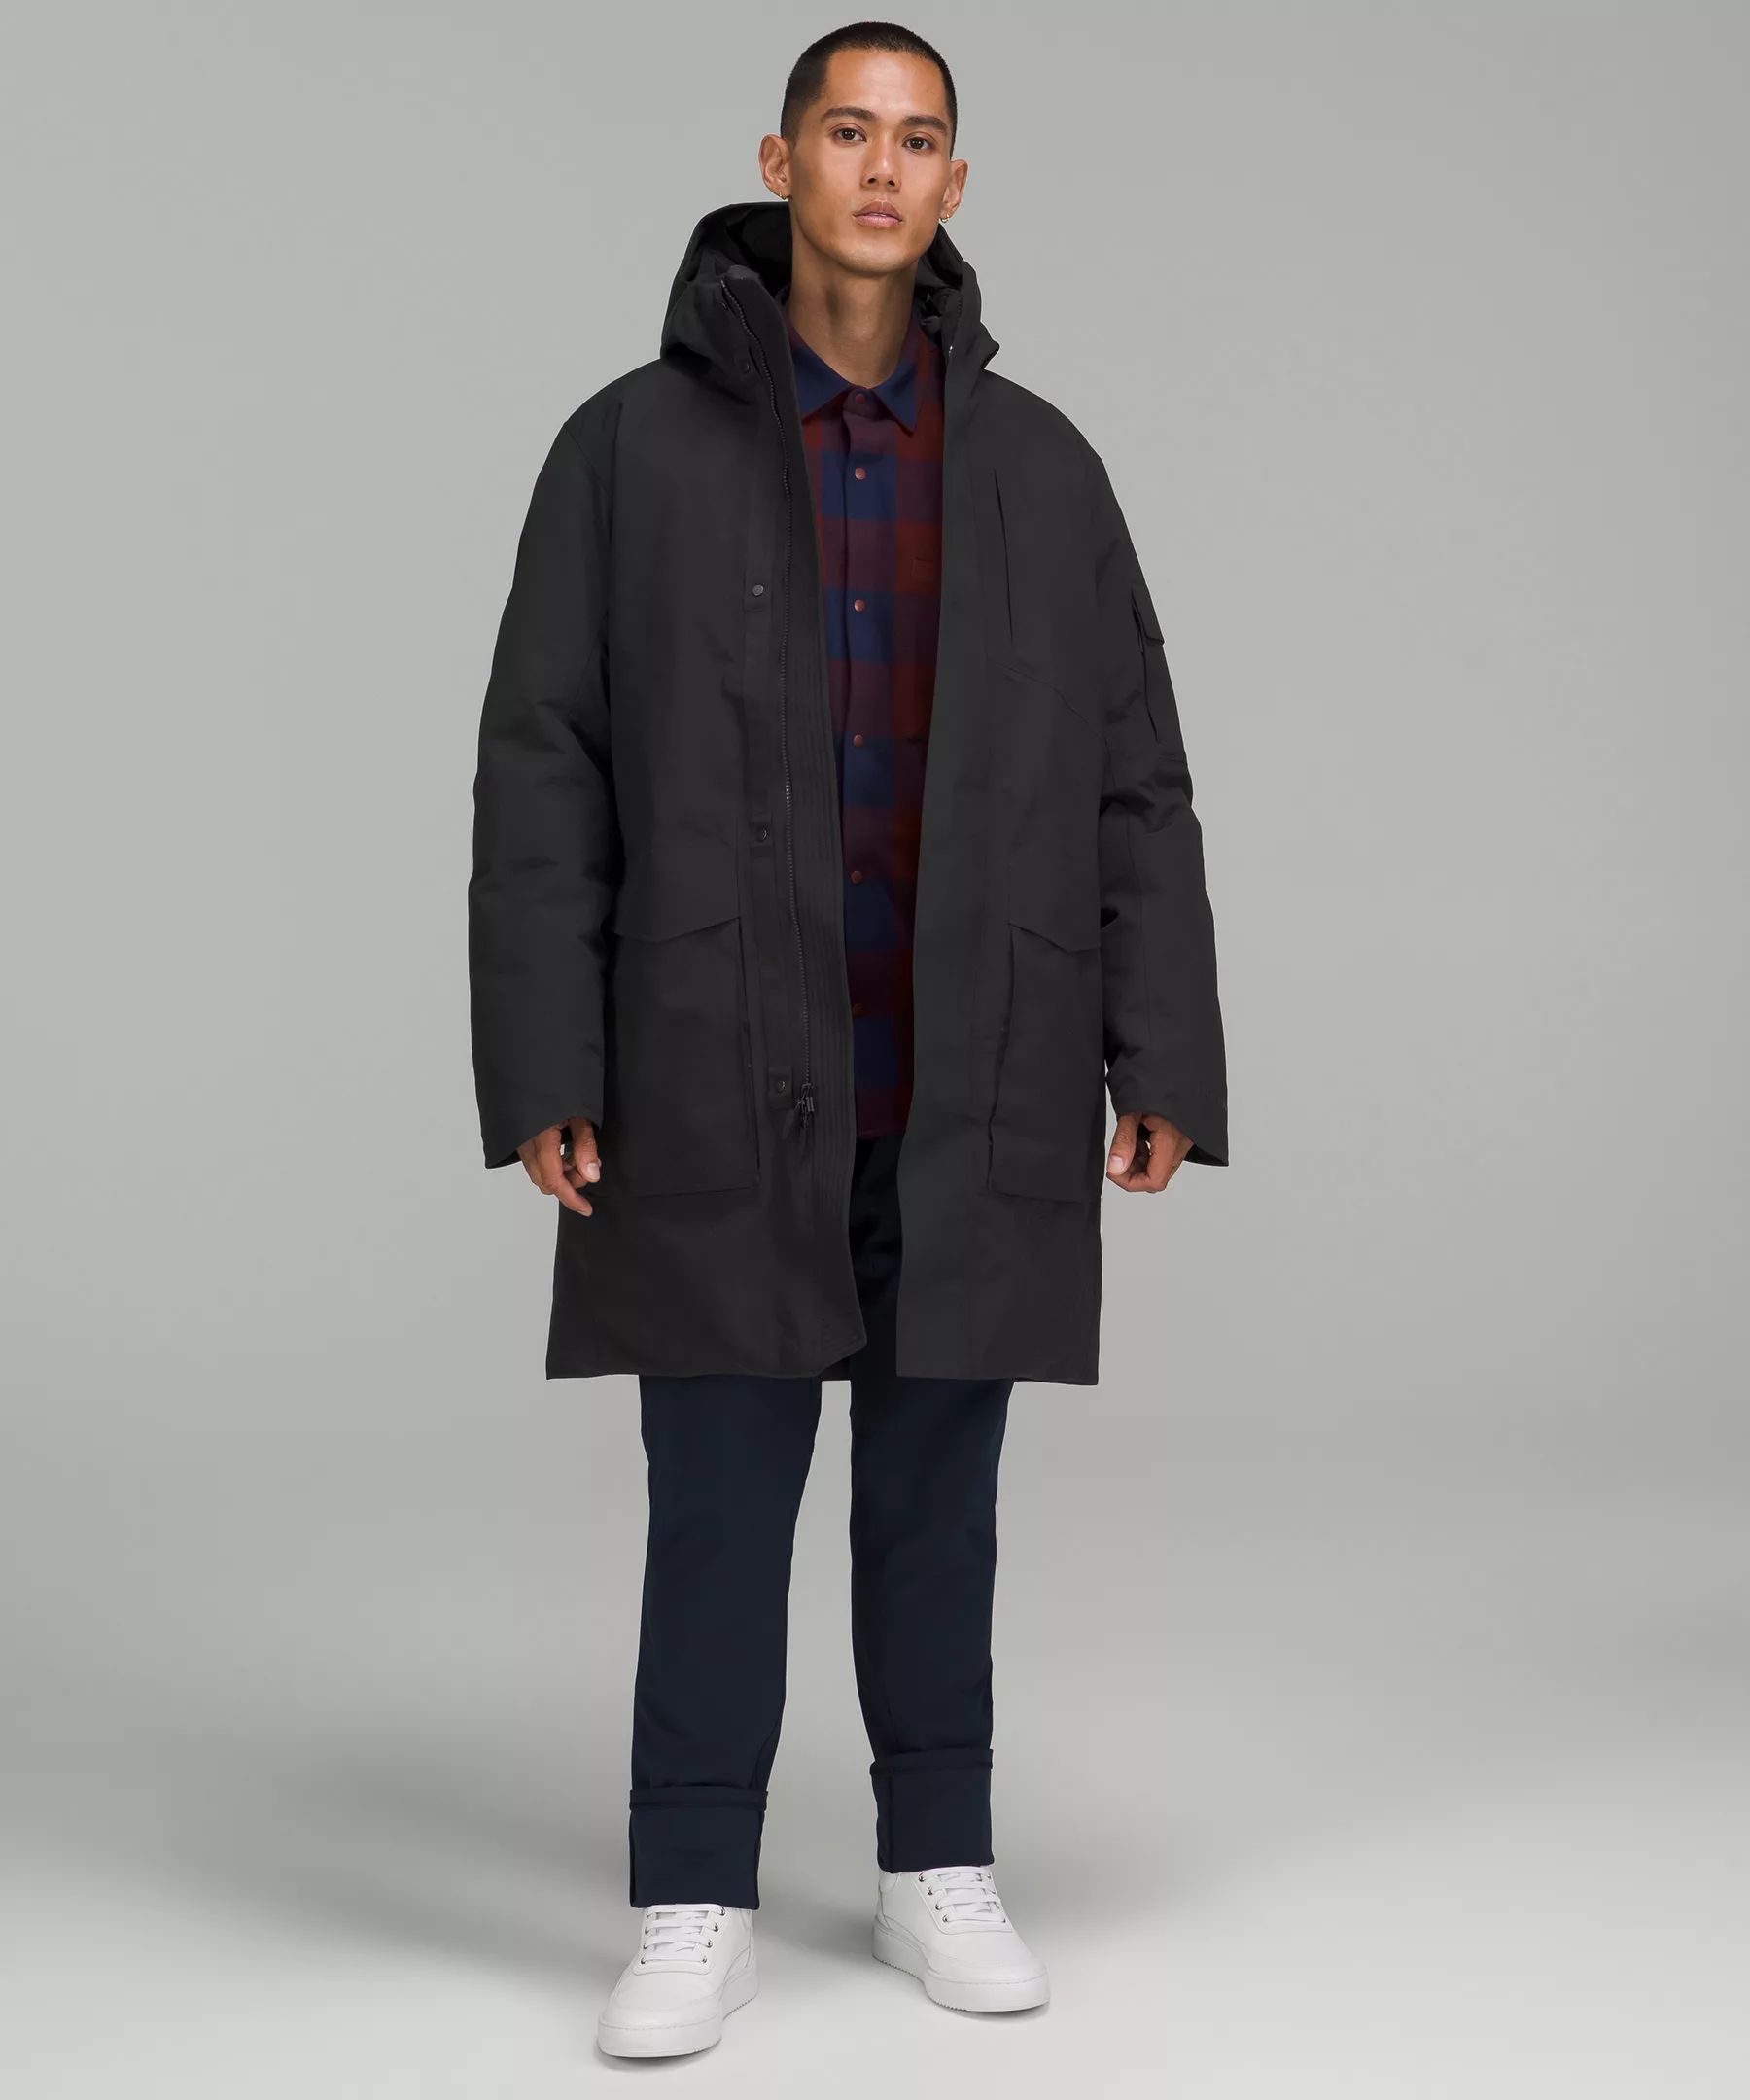 Cold City Parka | Men's Jackets & Coats | lululemon | Lululemon (US)